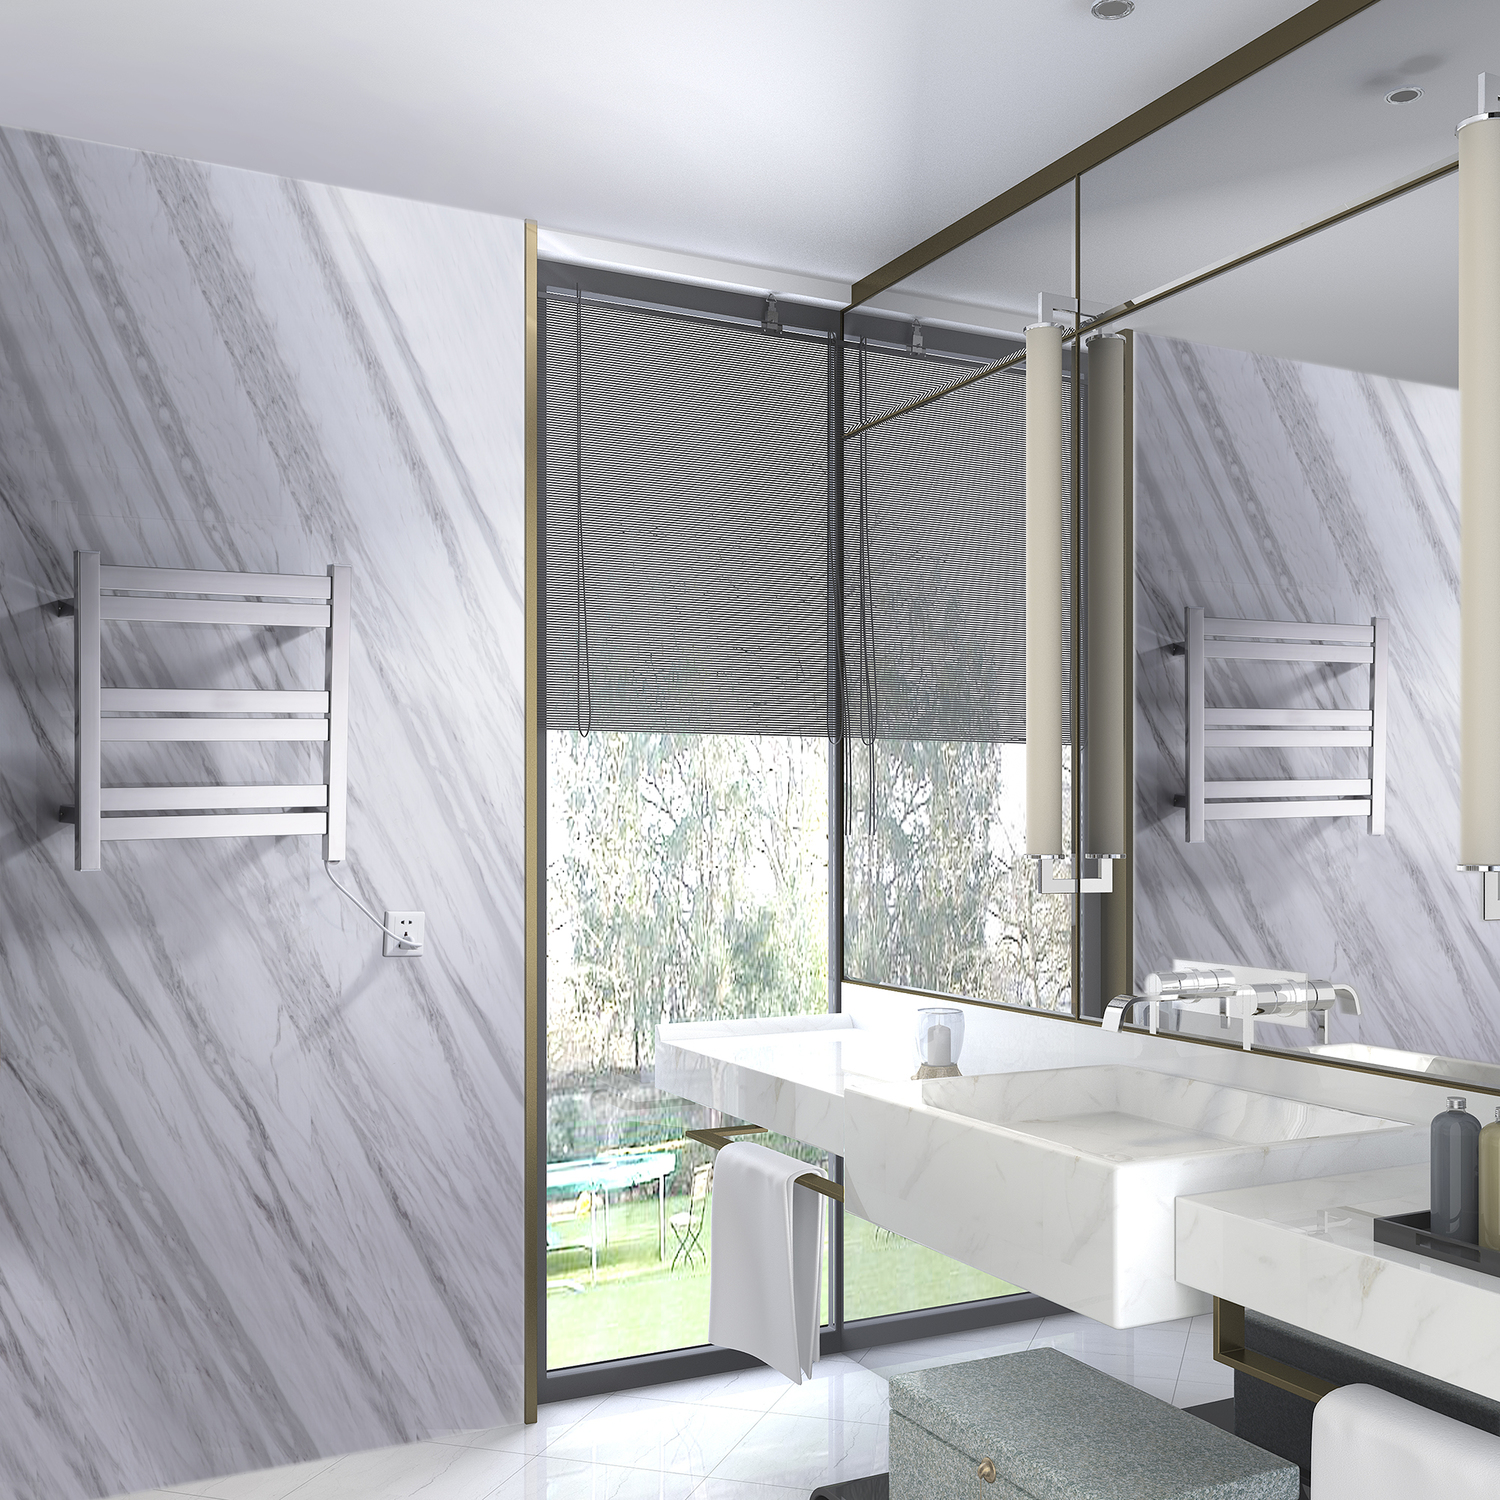 bath towel drying rack Anzzi BATHROOM - Towel Warmers - Wall Mounted Chrome